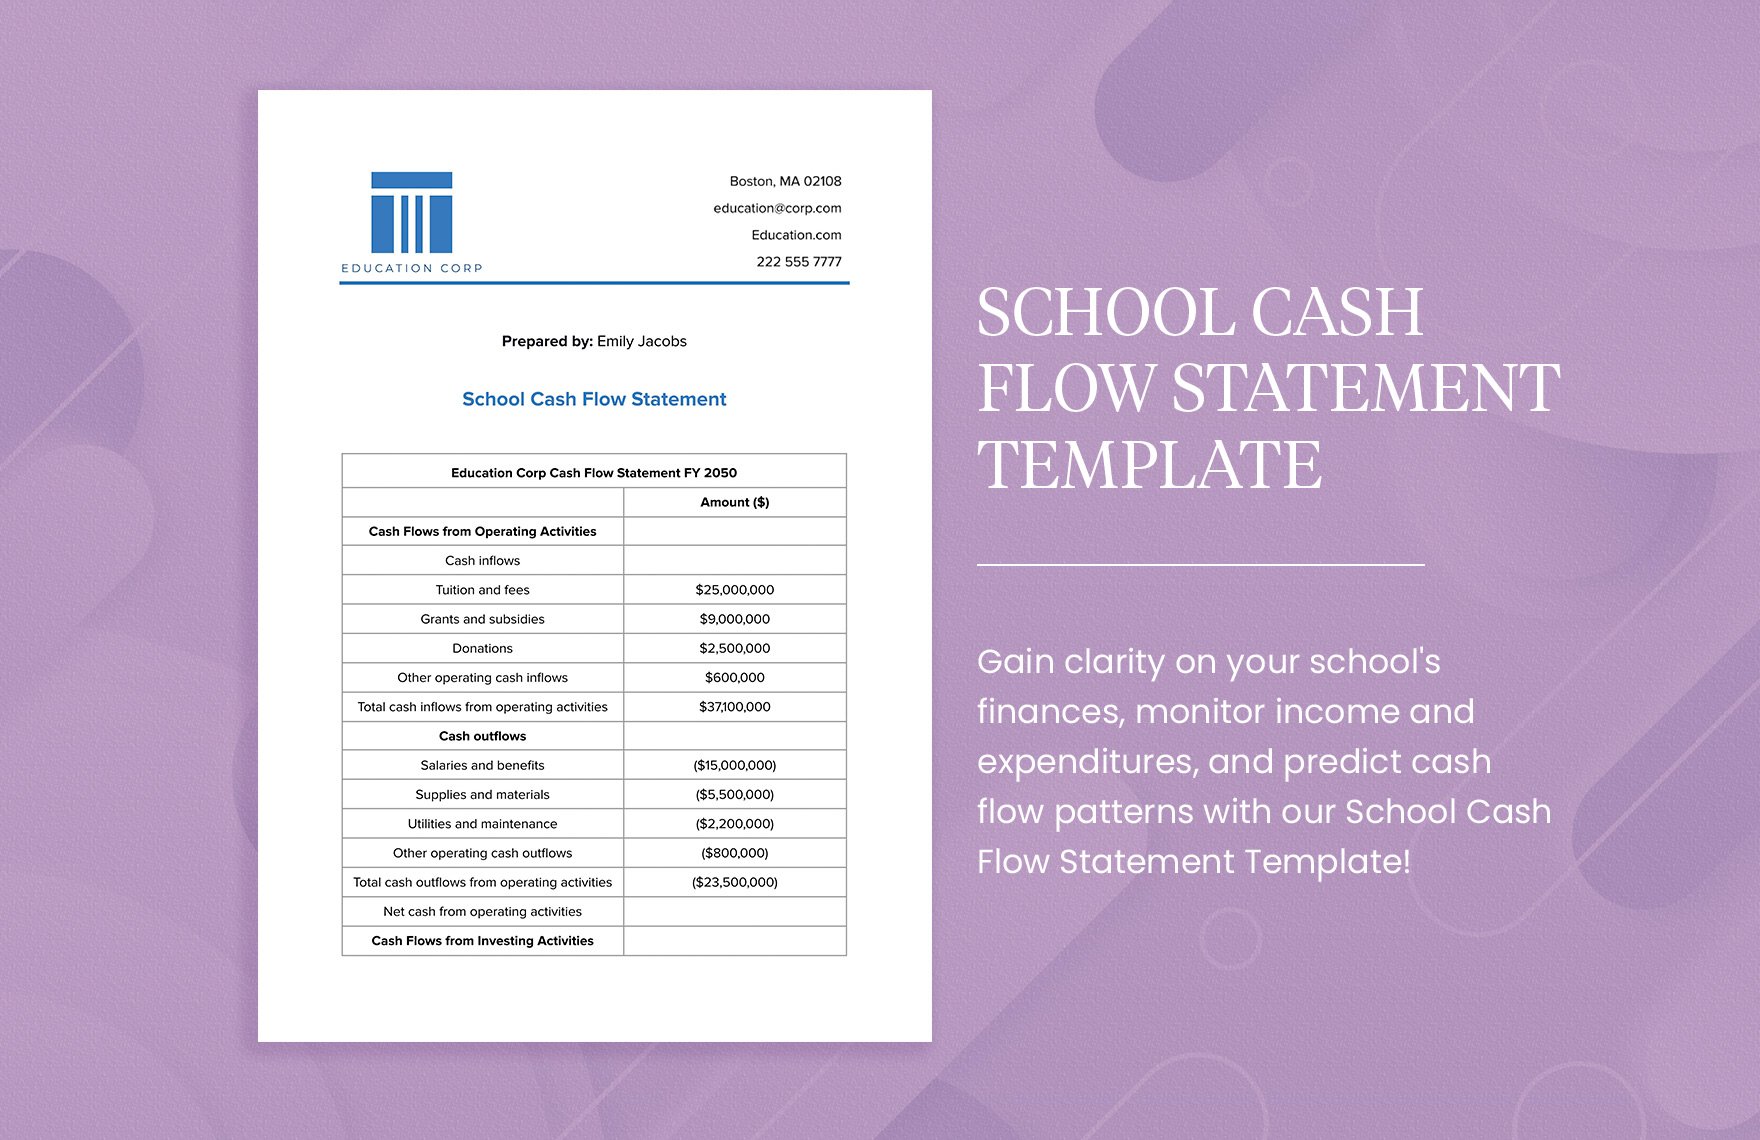 School Cash Flow Statement Template in Word, Google Docs, PDF